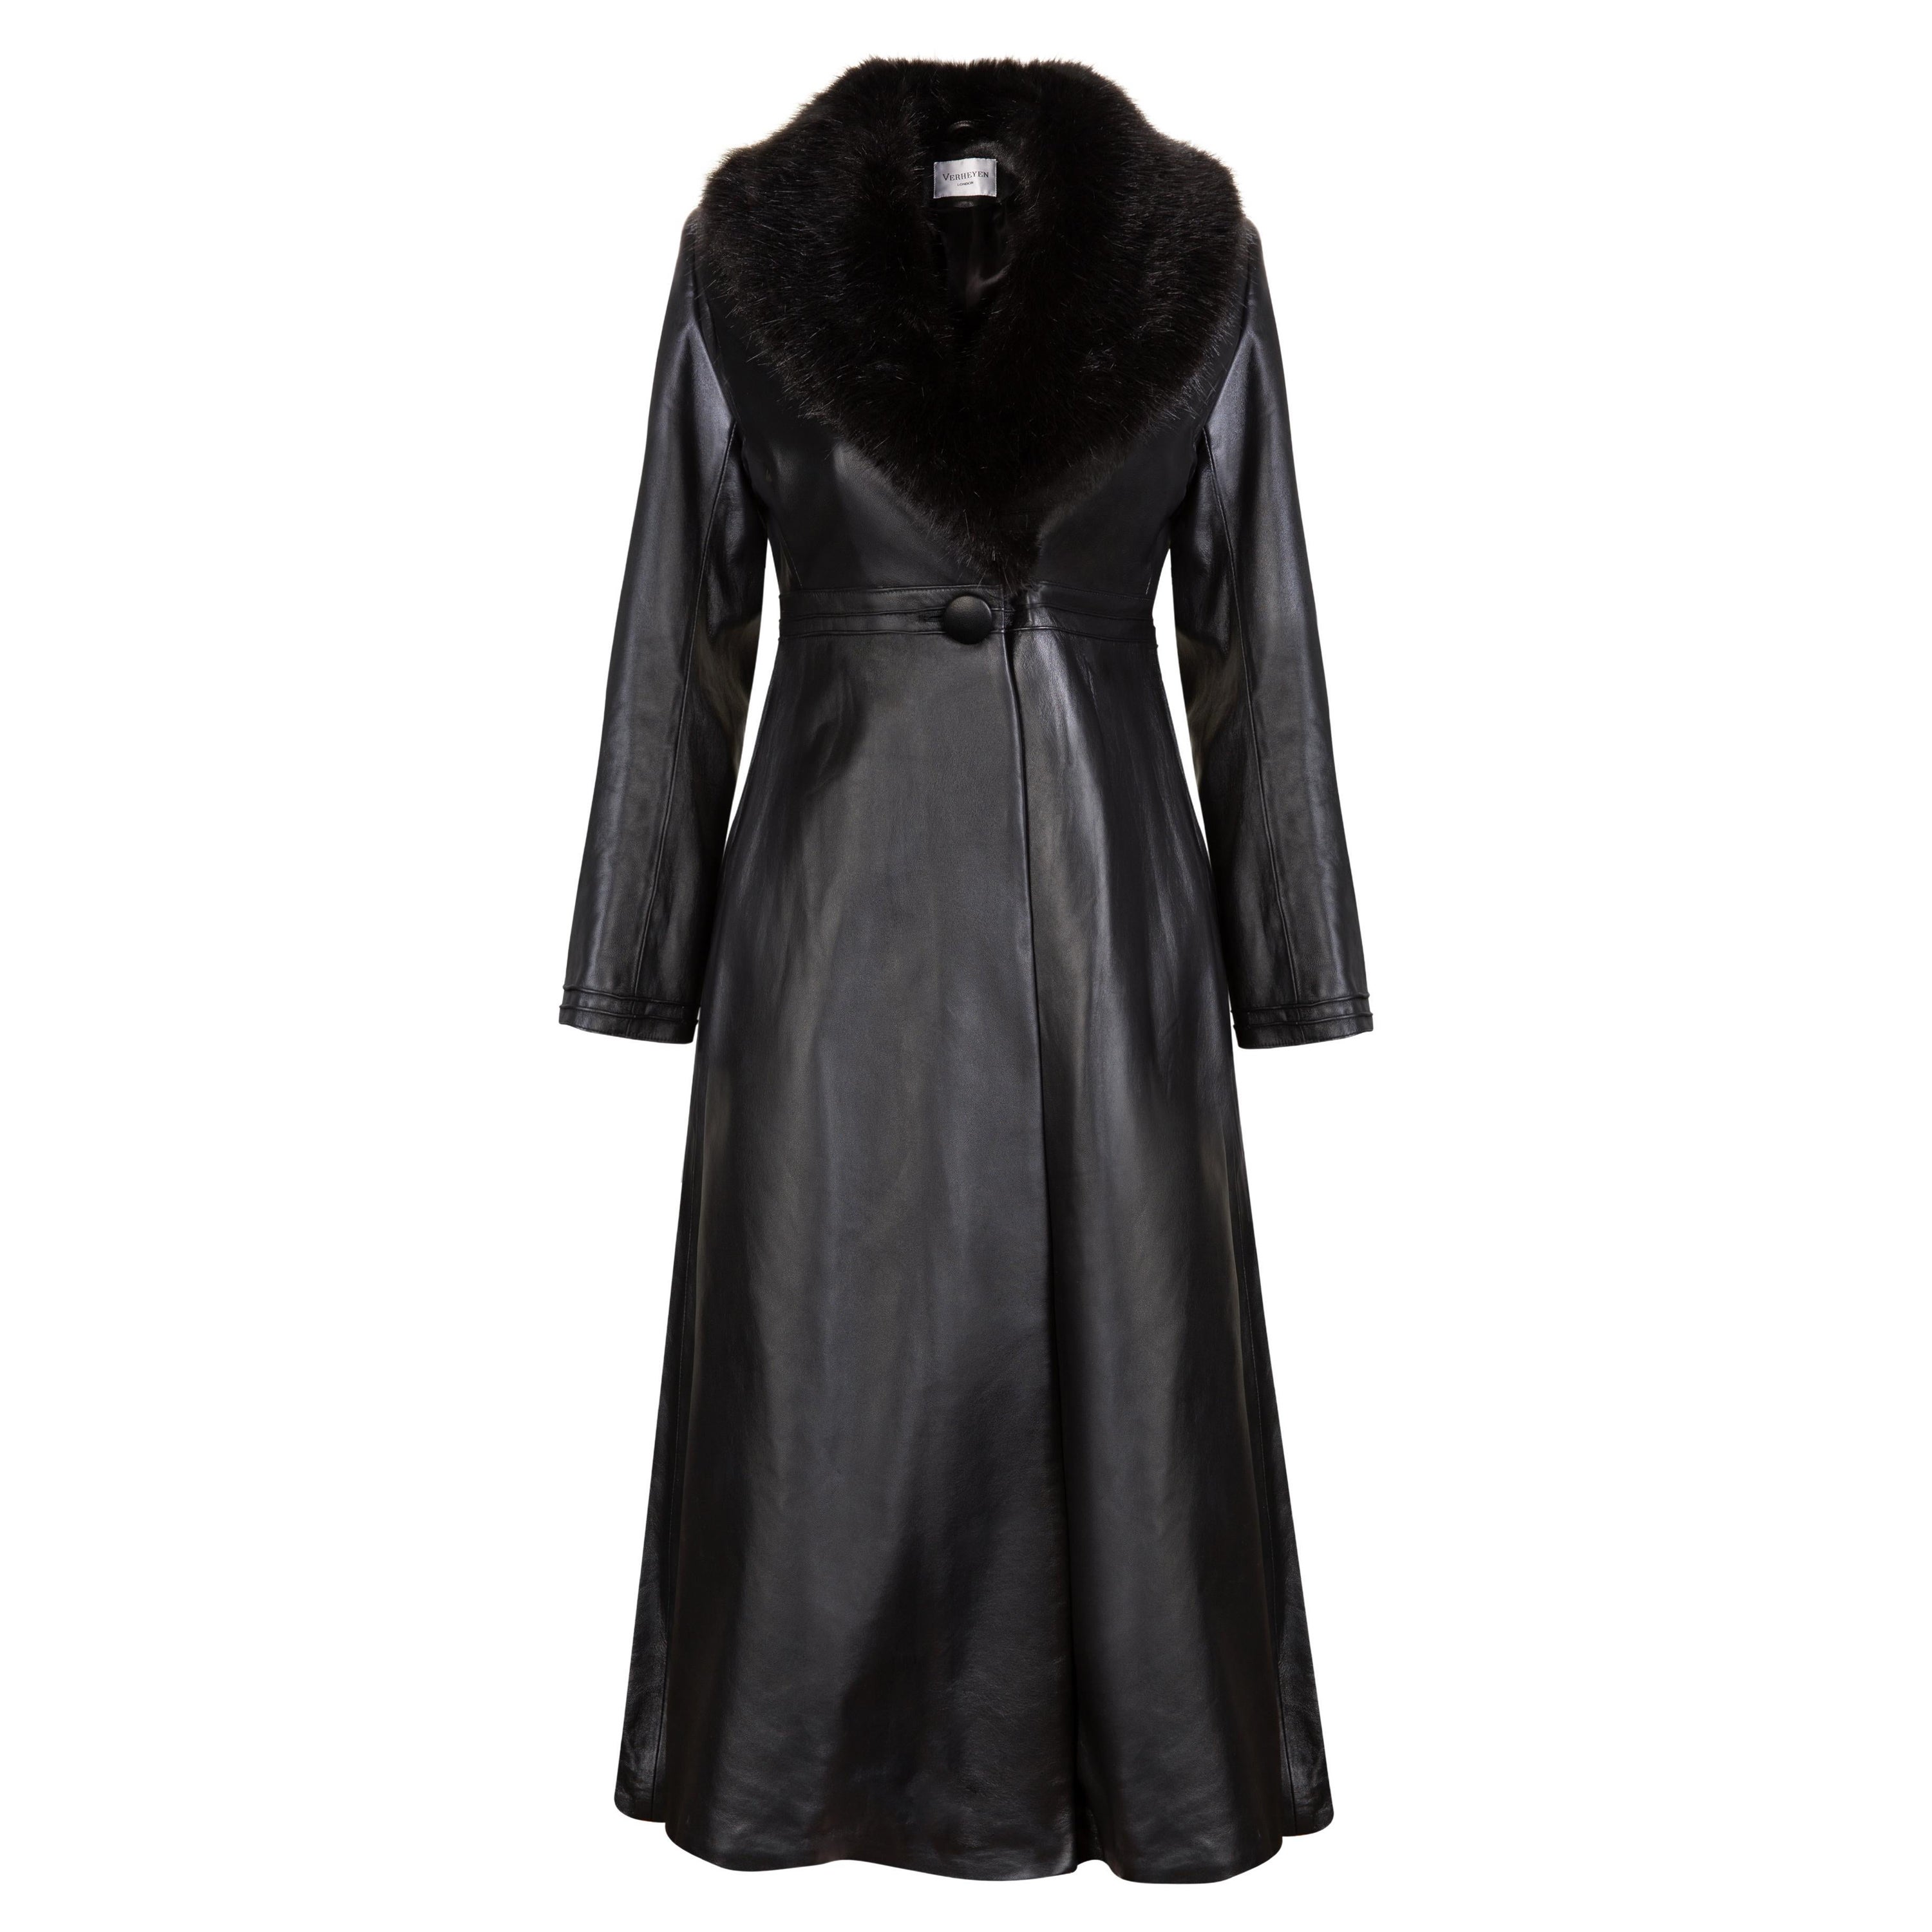 Verheyen London Edward Leather Coat with Faux Fur Collar in Black - Size uk 16 For Sale